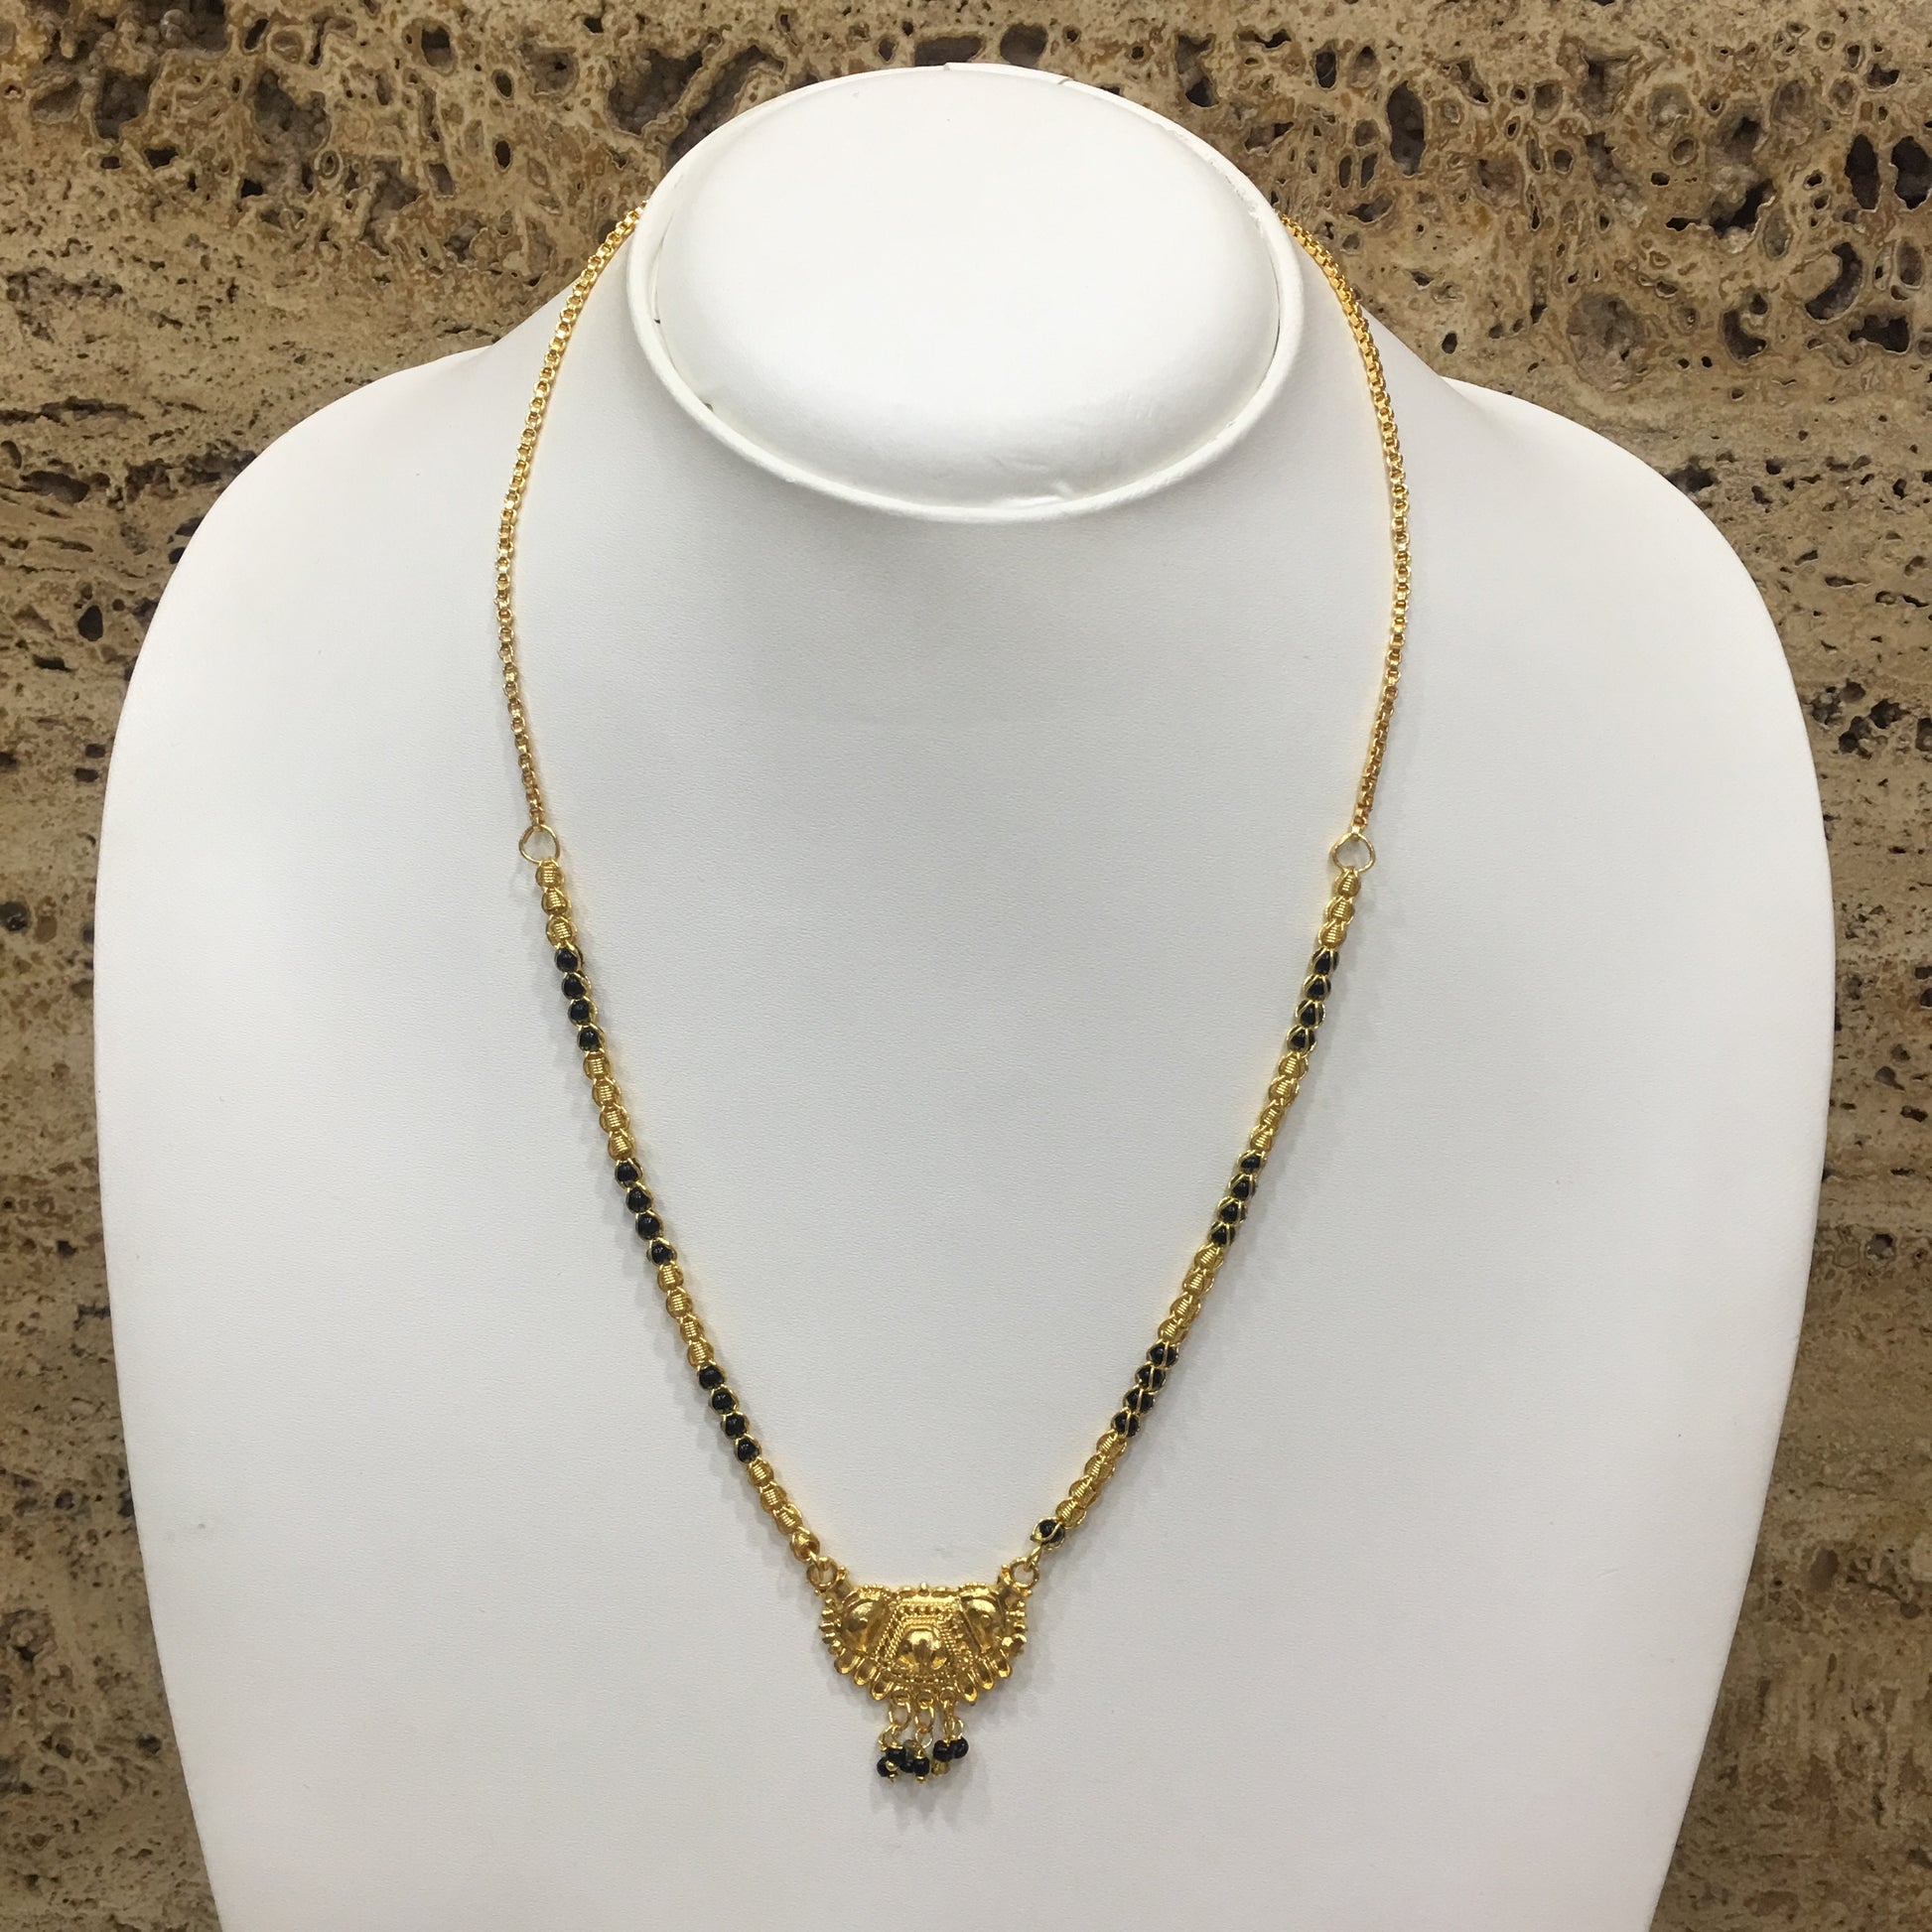 Digital Dress Room Short Mangalsutra Designs Gold Plated Latest Pendant Black & Gold Beads Single Layer Chain Mangalsutra